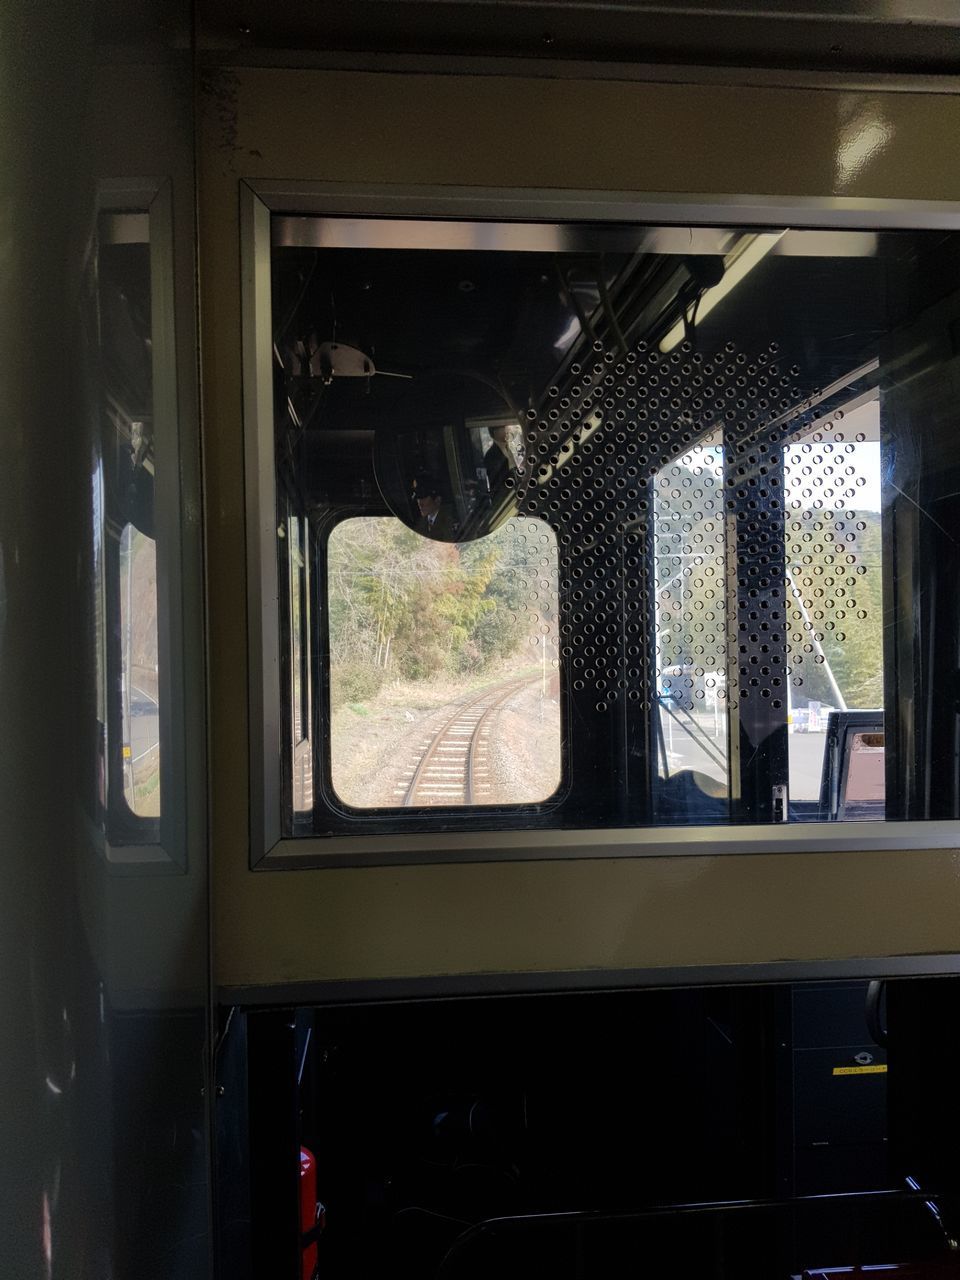 TRAIN SEEN THROUGH GLASS WINDOW OF RAILROAD STATION